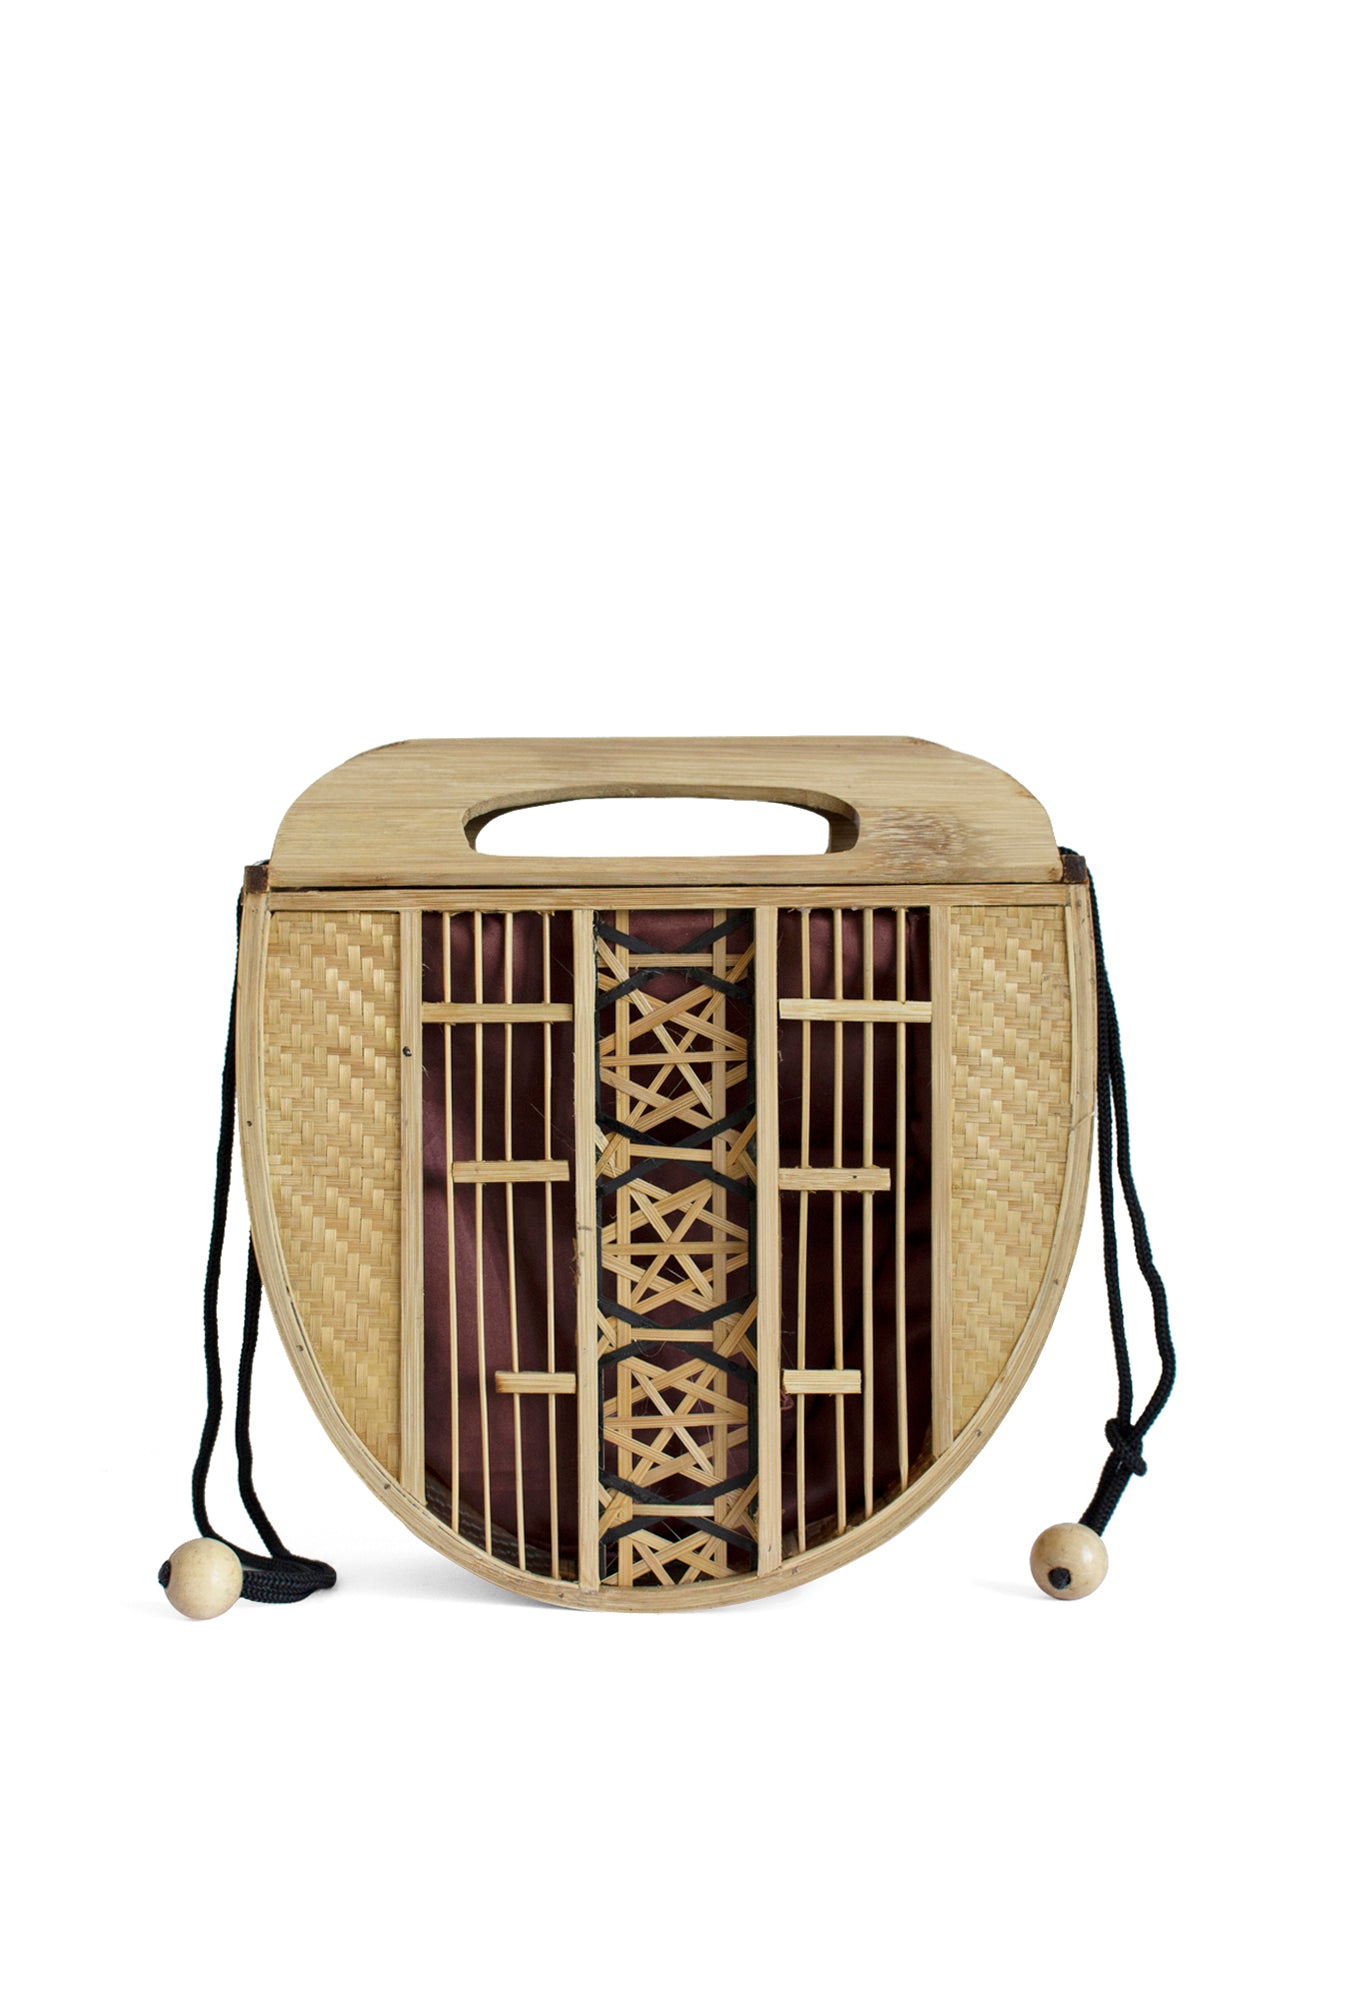 Handmade Bamboo Vintage Bags, Handbags & Cases for sale | eBay